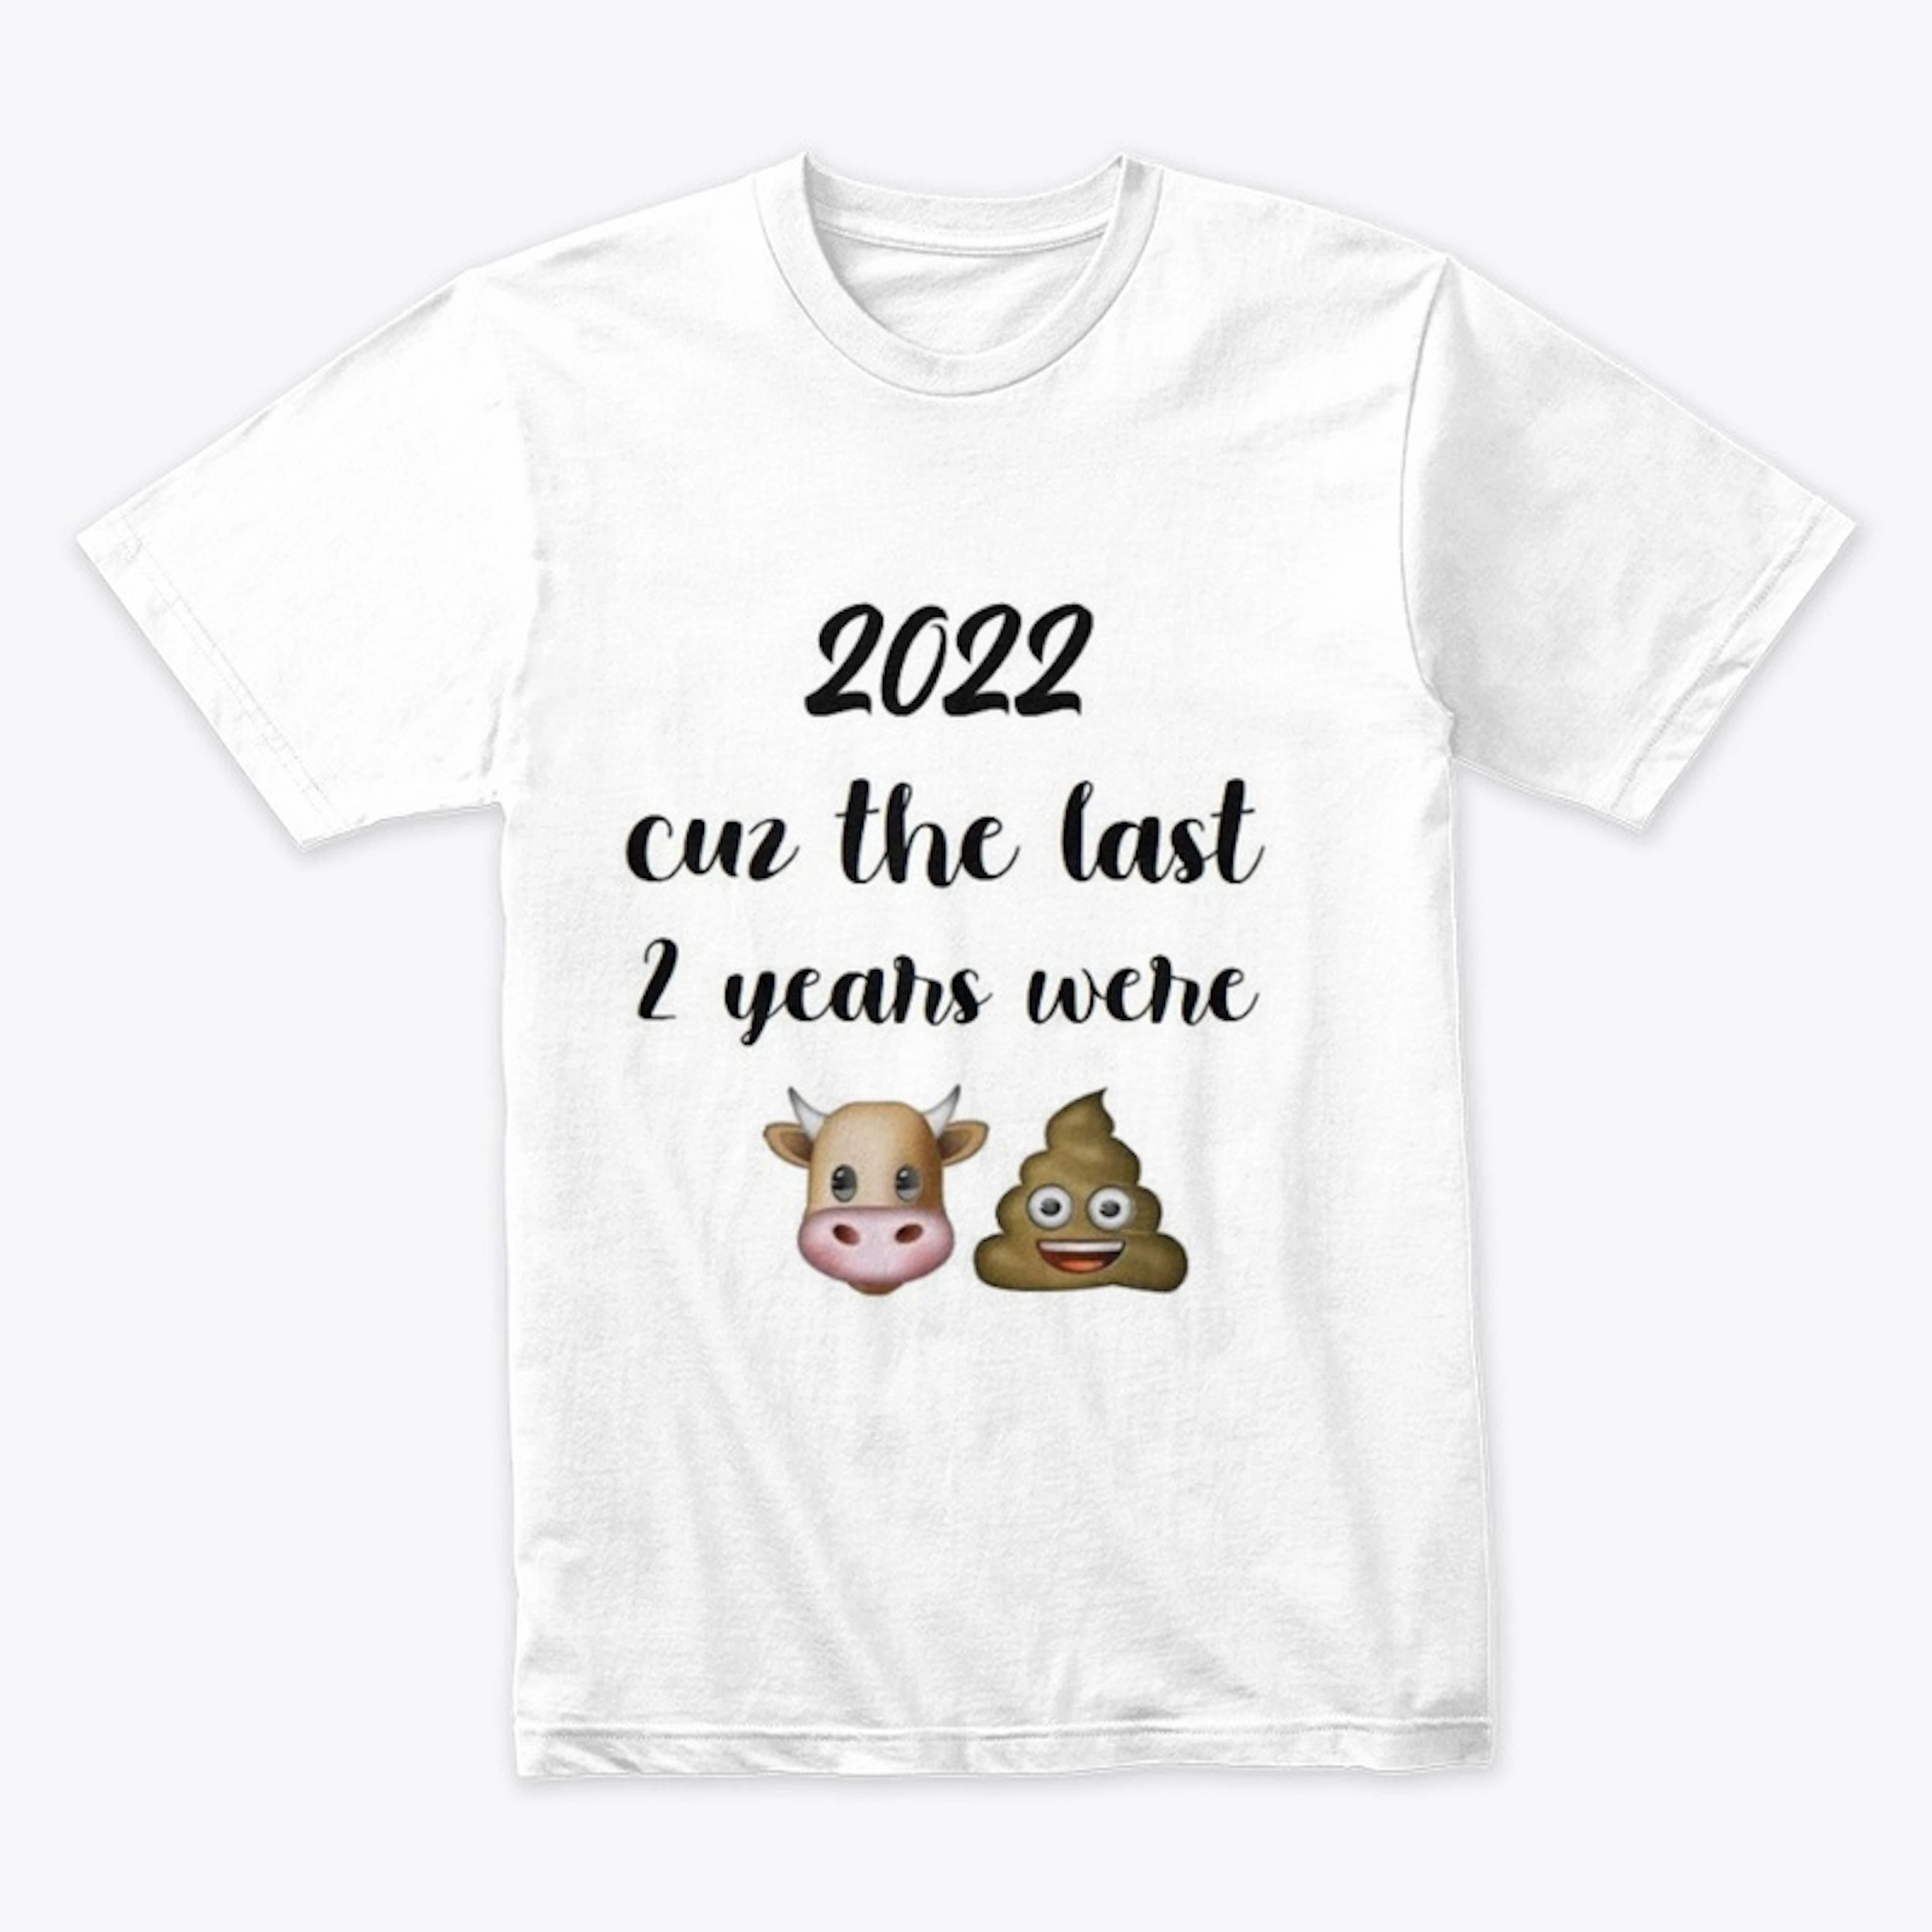 Bring On 2022!